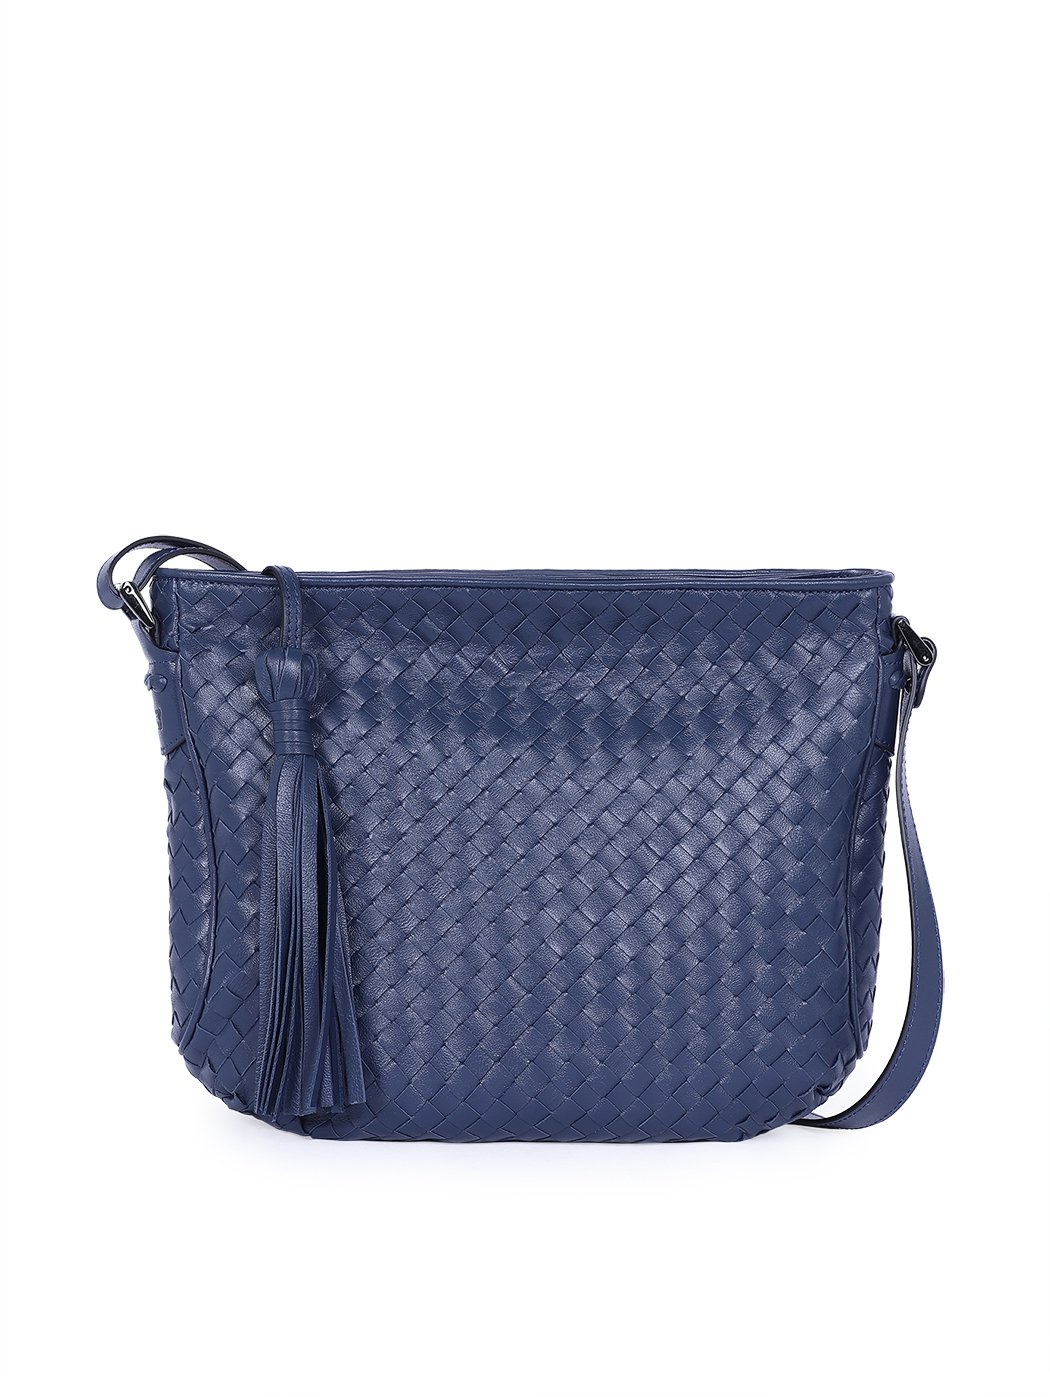 Classic Silhouette Woven Shoulder Bag Navy Blue